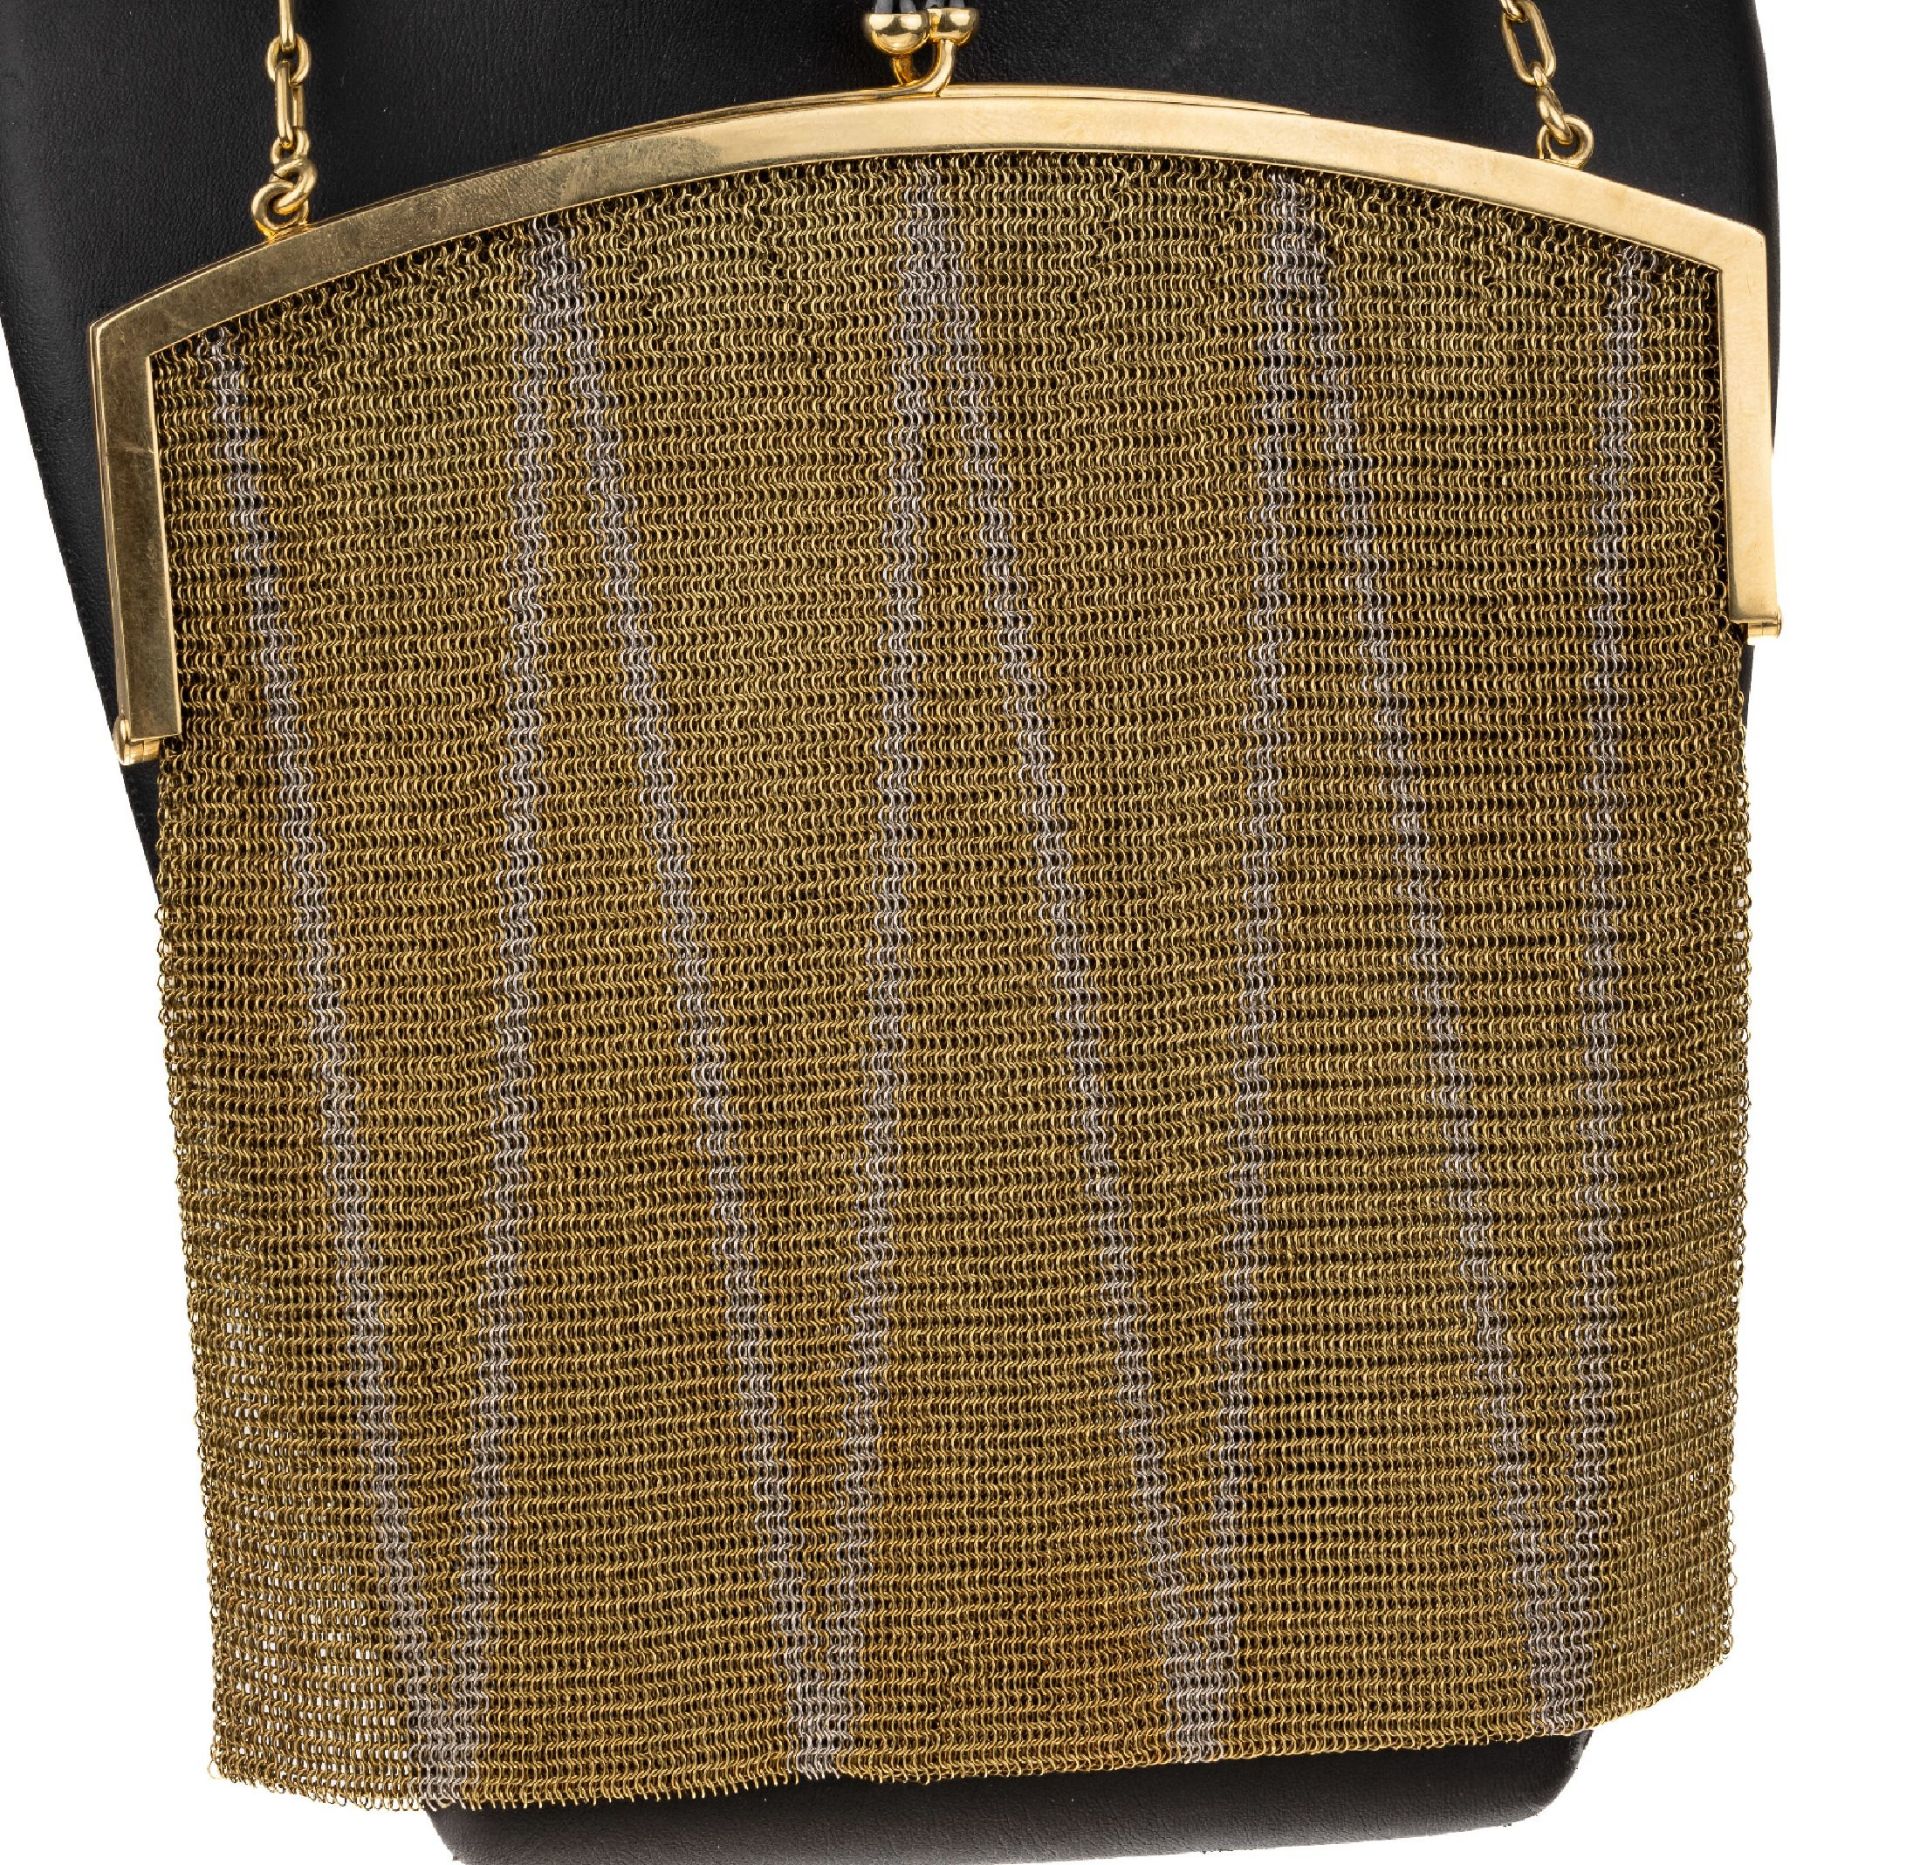 18 kt Gold Handtasche, 1930er Jahre, GG/WG 750/000, - Image 2 of 2